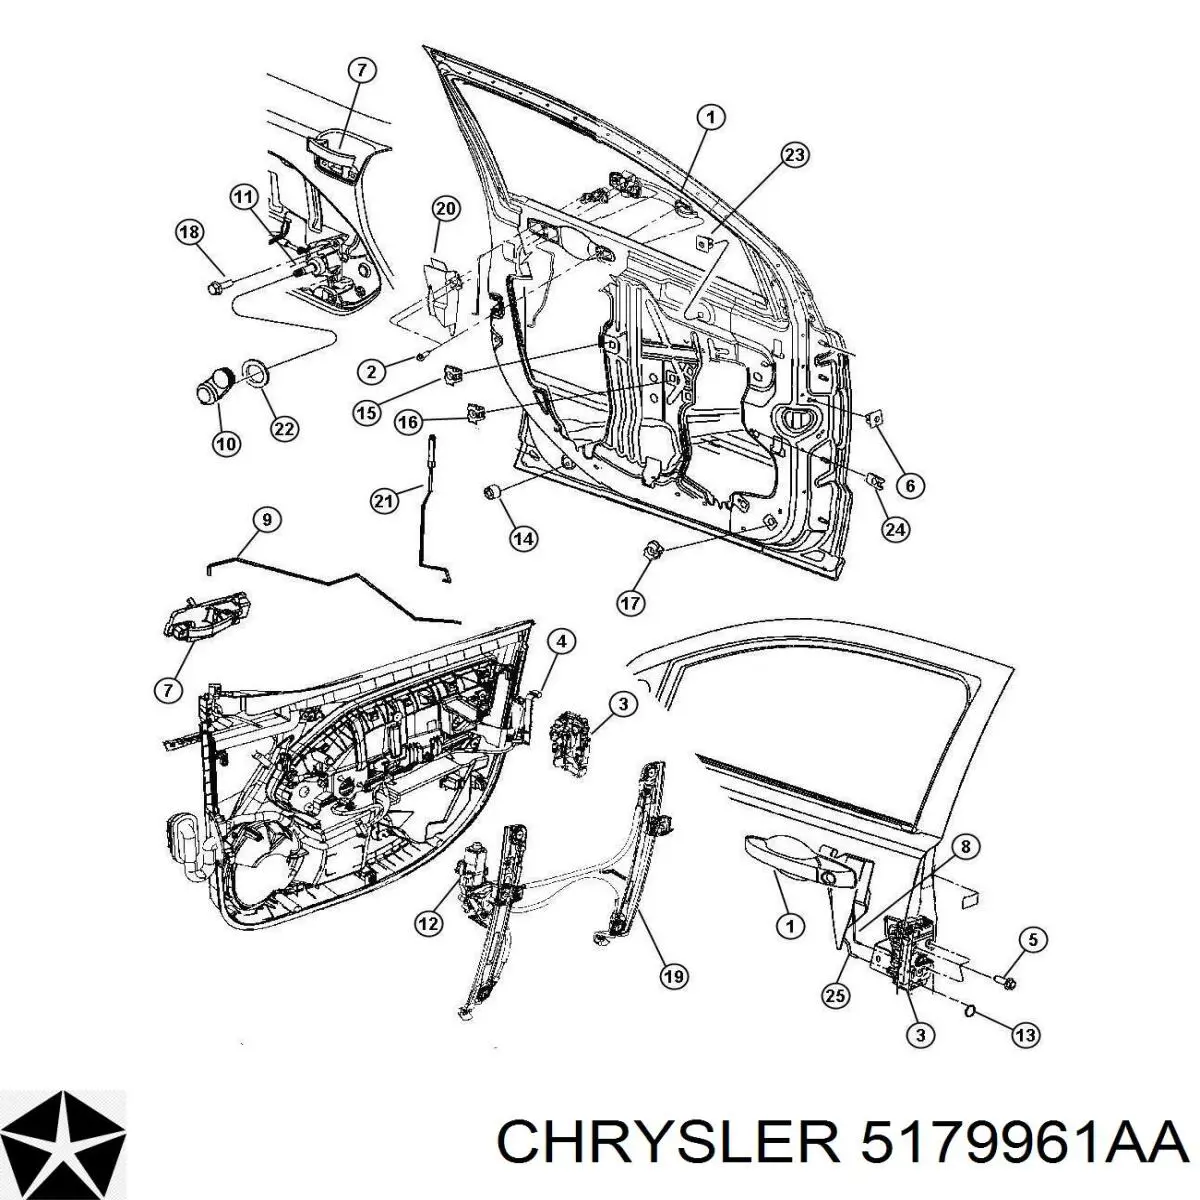 05179961AA Chrysler